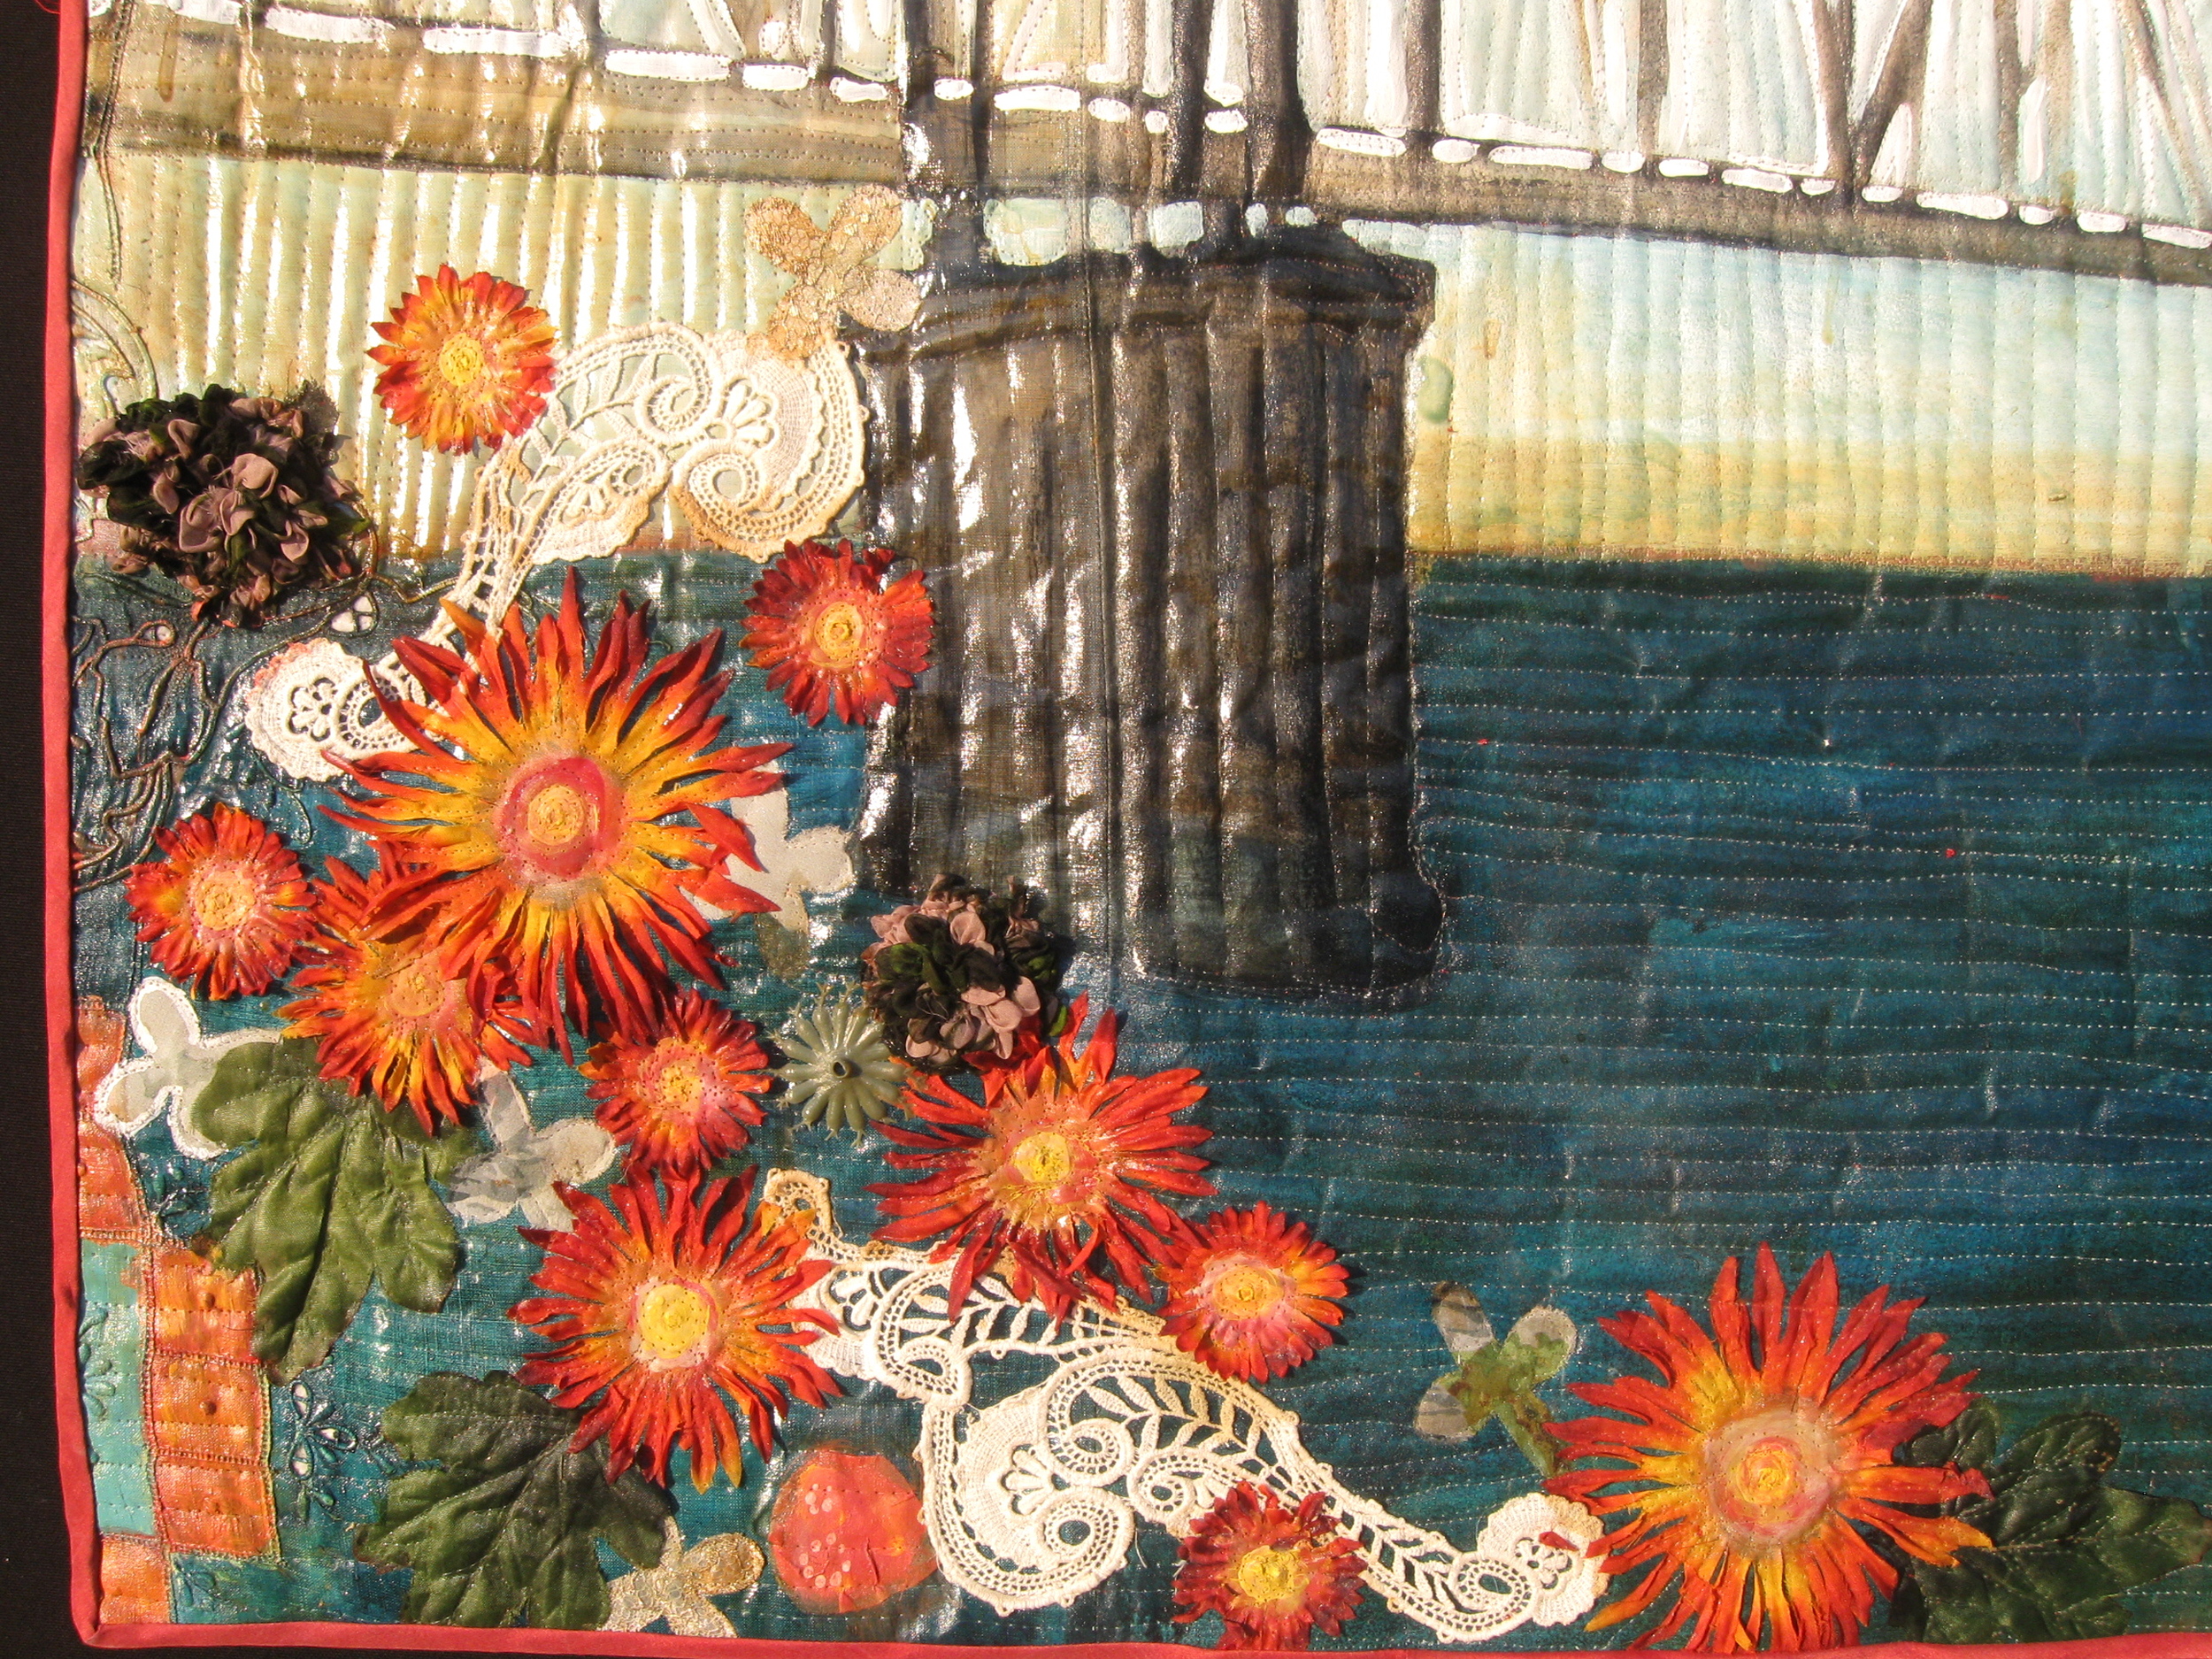 Detail, "Bridge with Birds"